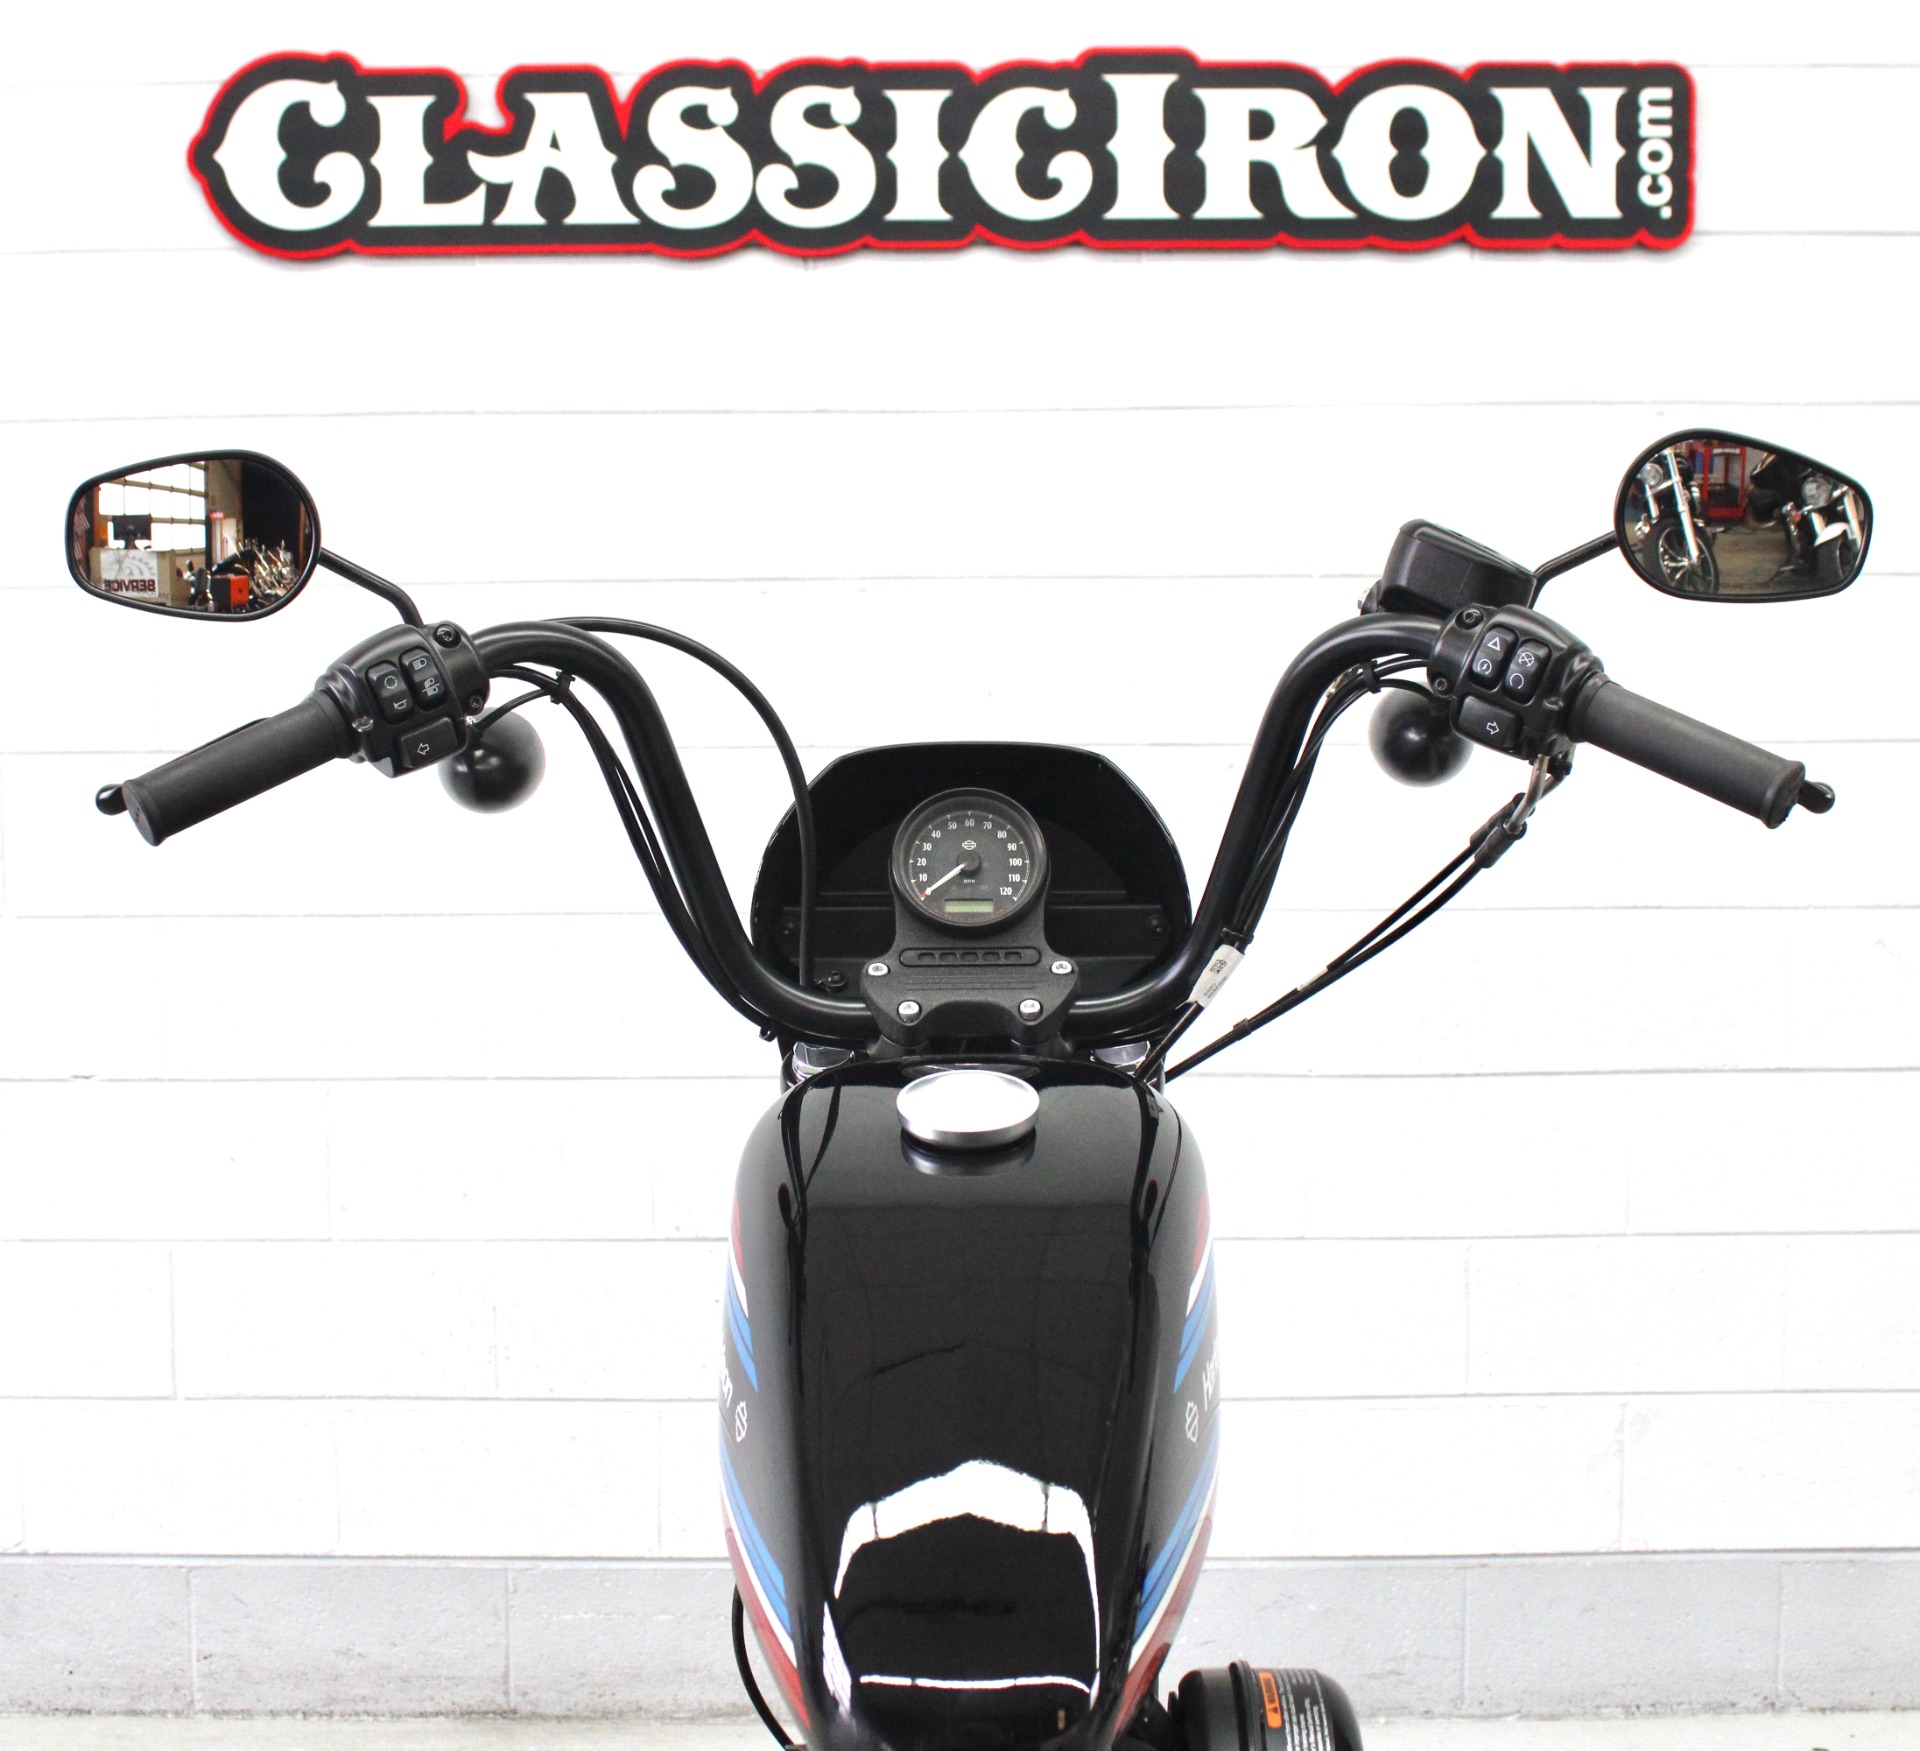 2020 Harley-Davidson Iron 1200™ in Fredericksburg, Virginia - Photo 10